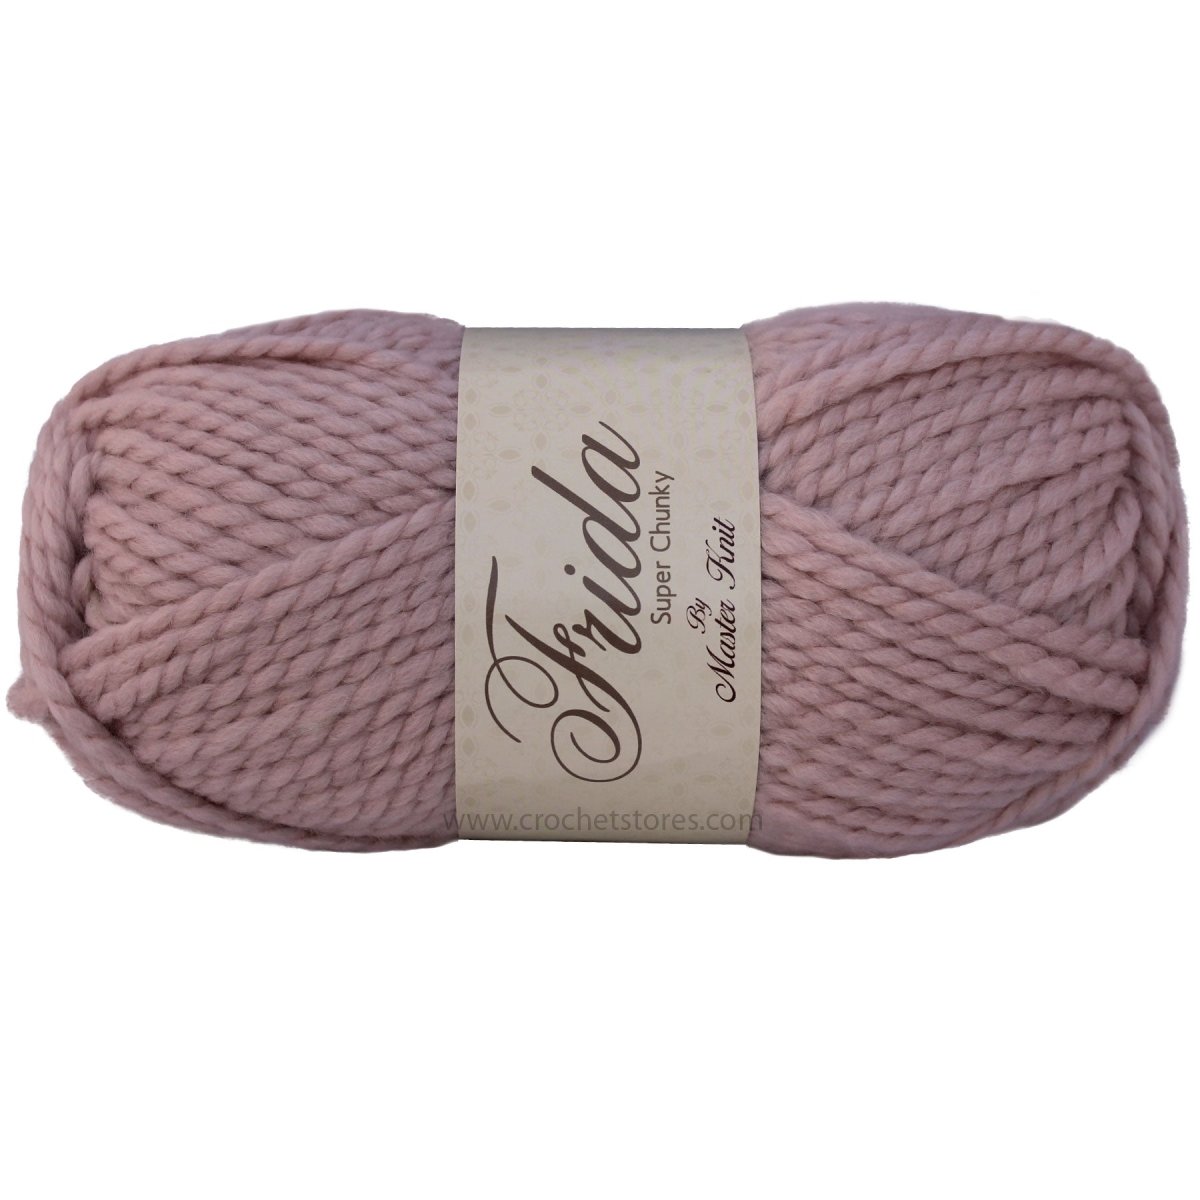 FRIDA SUPER CHUNKY - Crochetstores9470-131745051437404